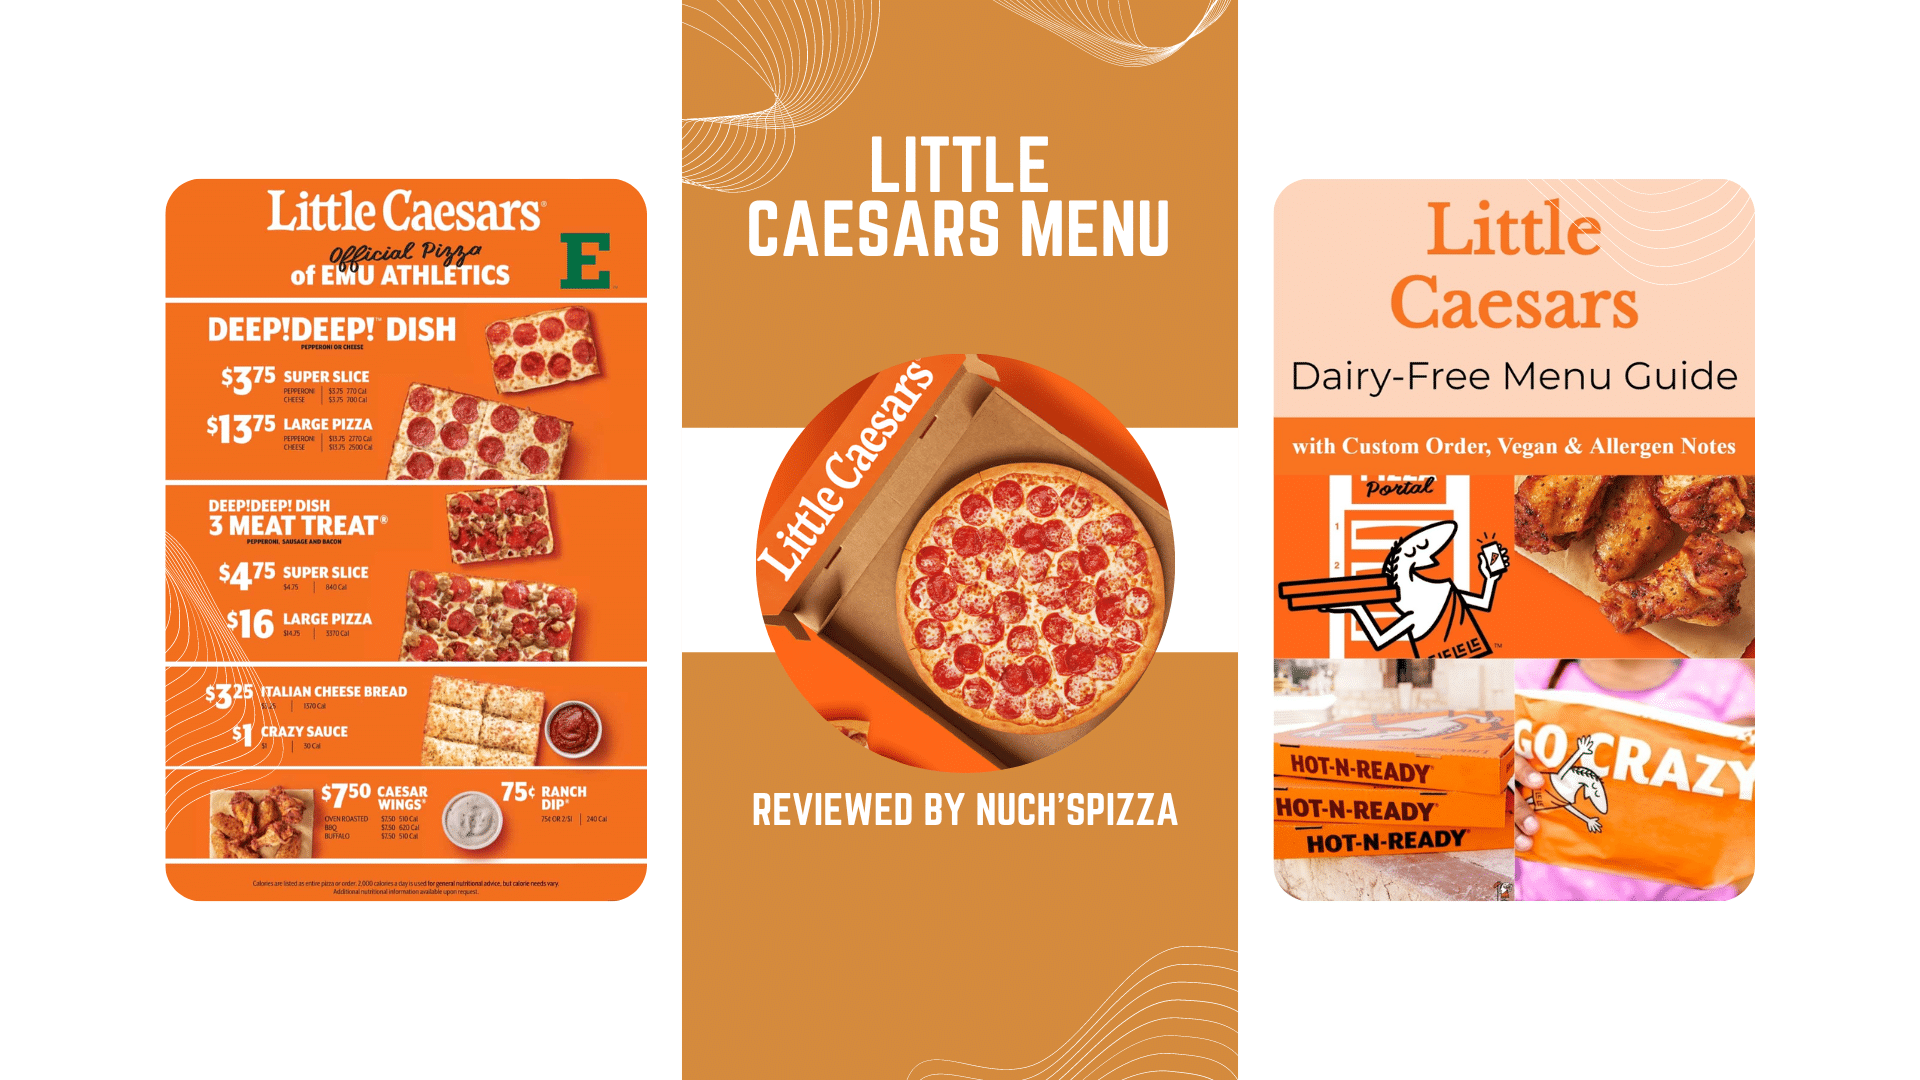 Little Caesars menu price